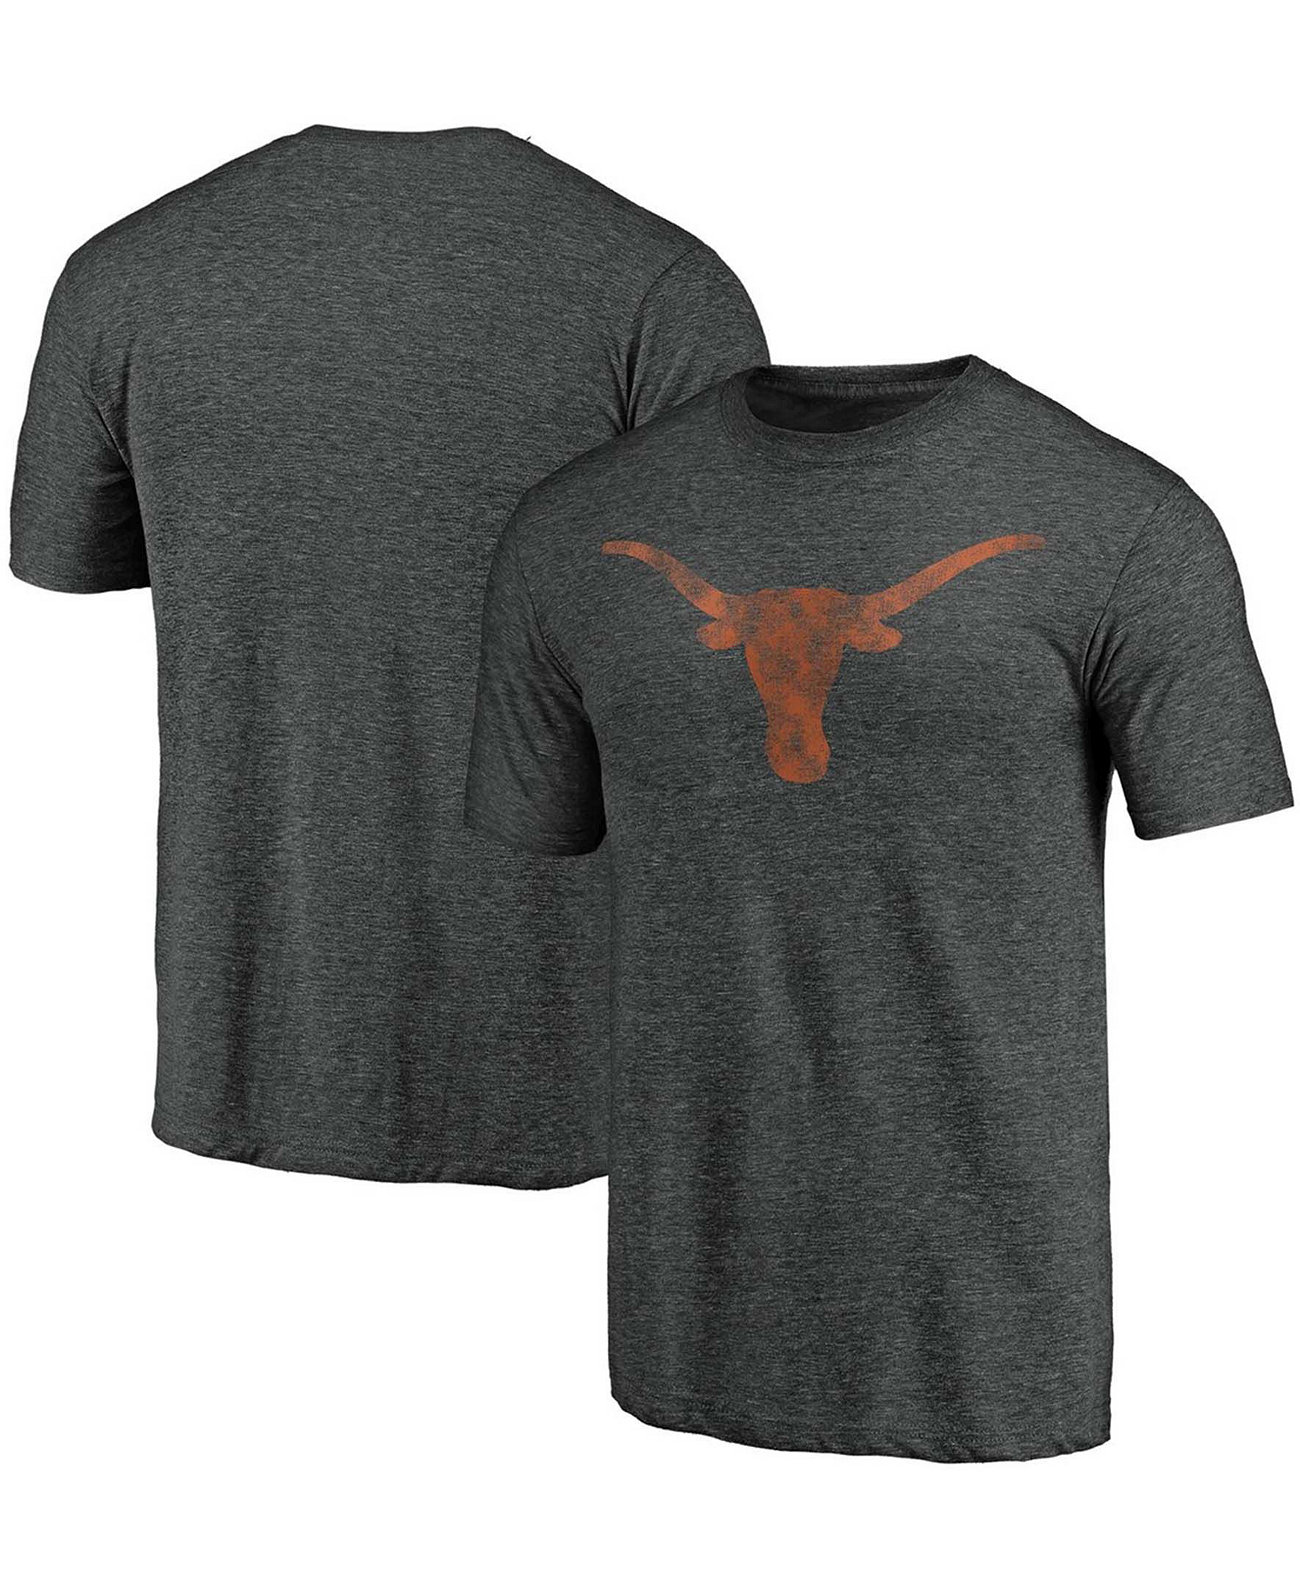 Мужская темно-серая футболка Texas Longhorns Classic Primary Tri-Blend футболка Fanatics